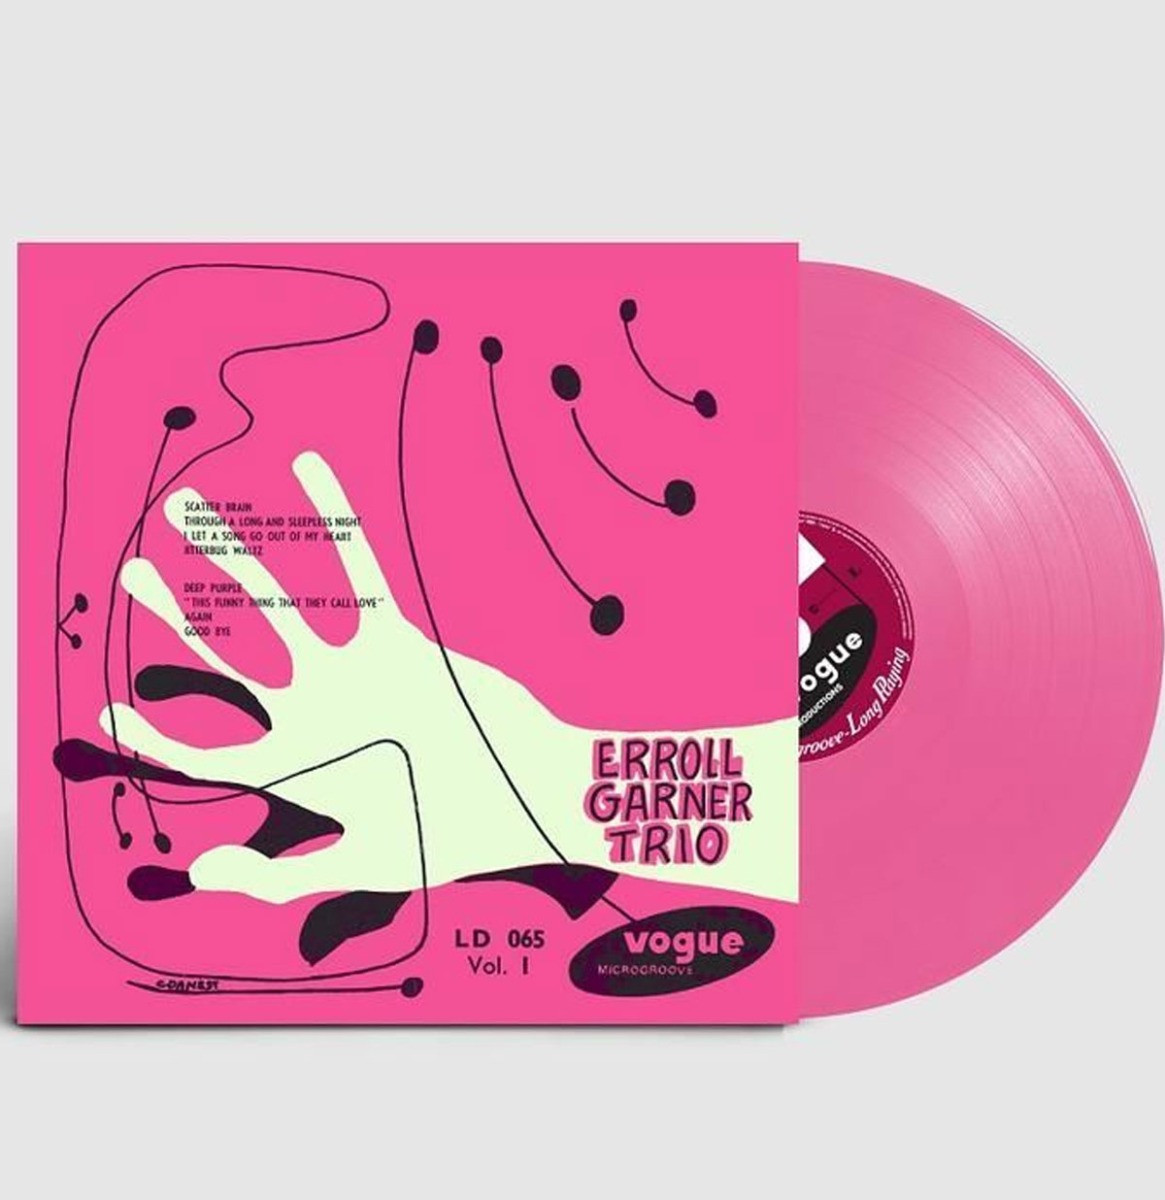 Erroll Garner Trio - Erroll Garner Trio Vol.1 LP Pink Vinyl